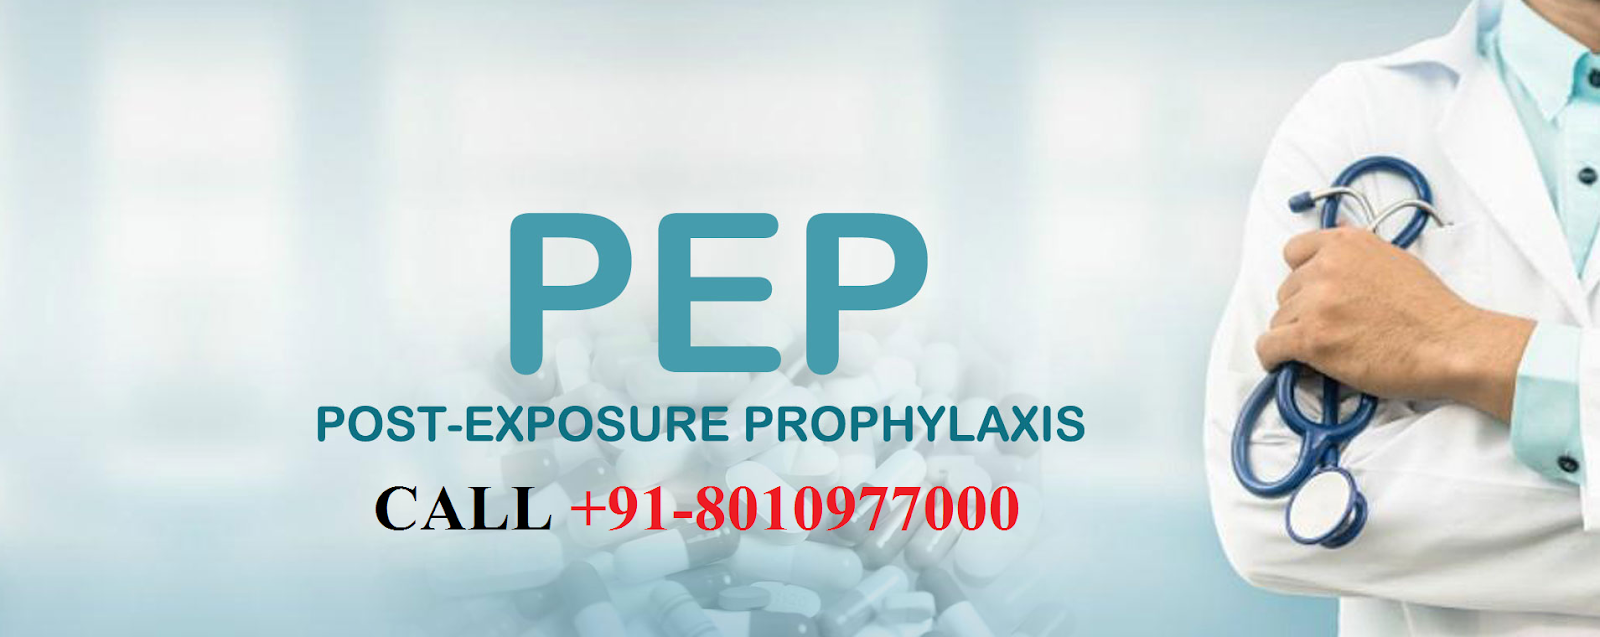 9355665333)- Hiv pep specialist in Sangam Vihar,Delhi,Services,Health & Beauty,77traders